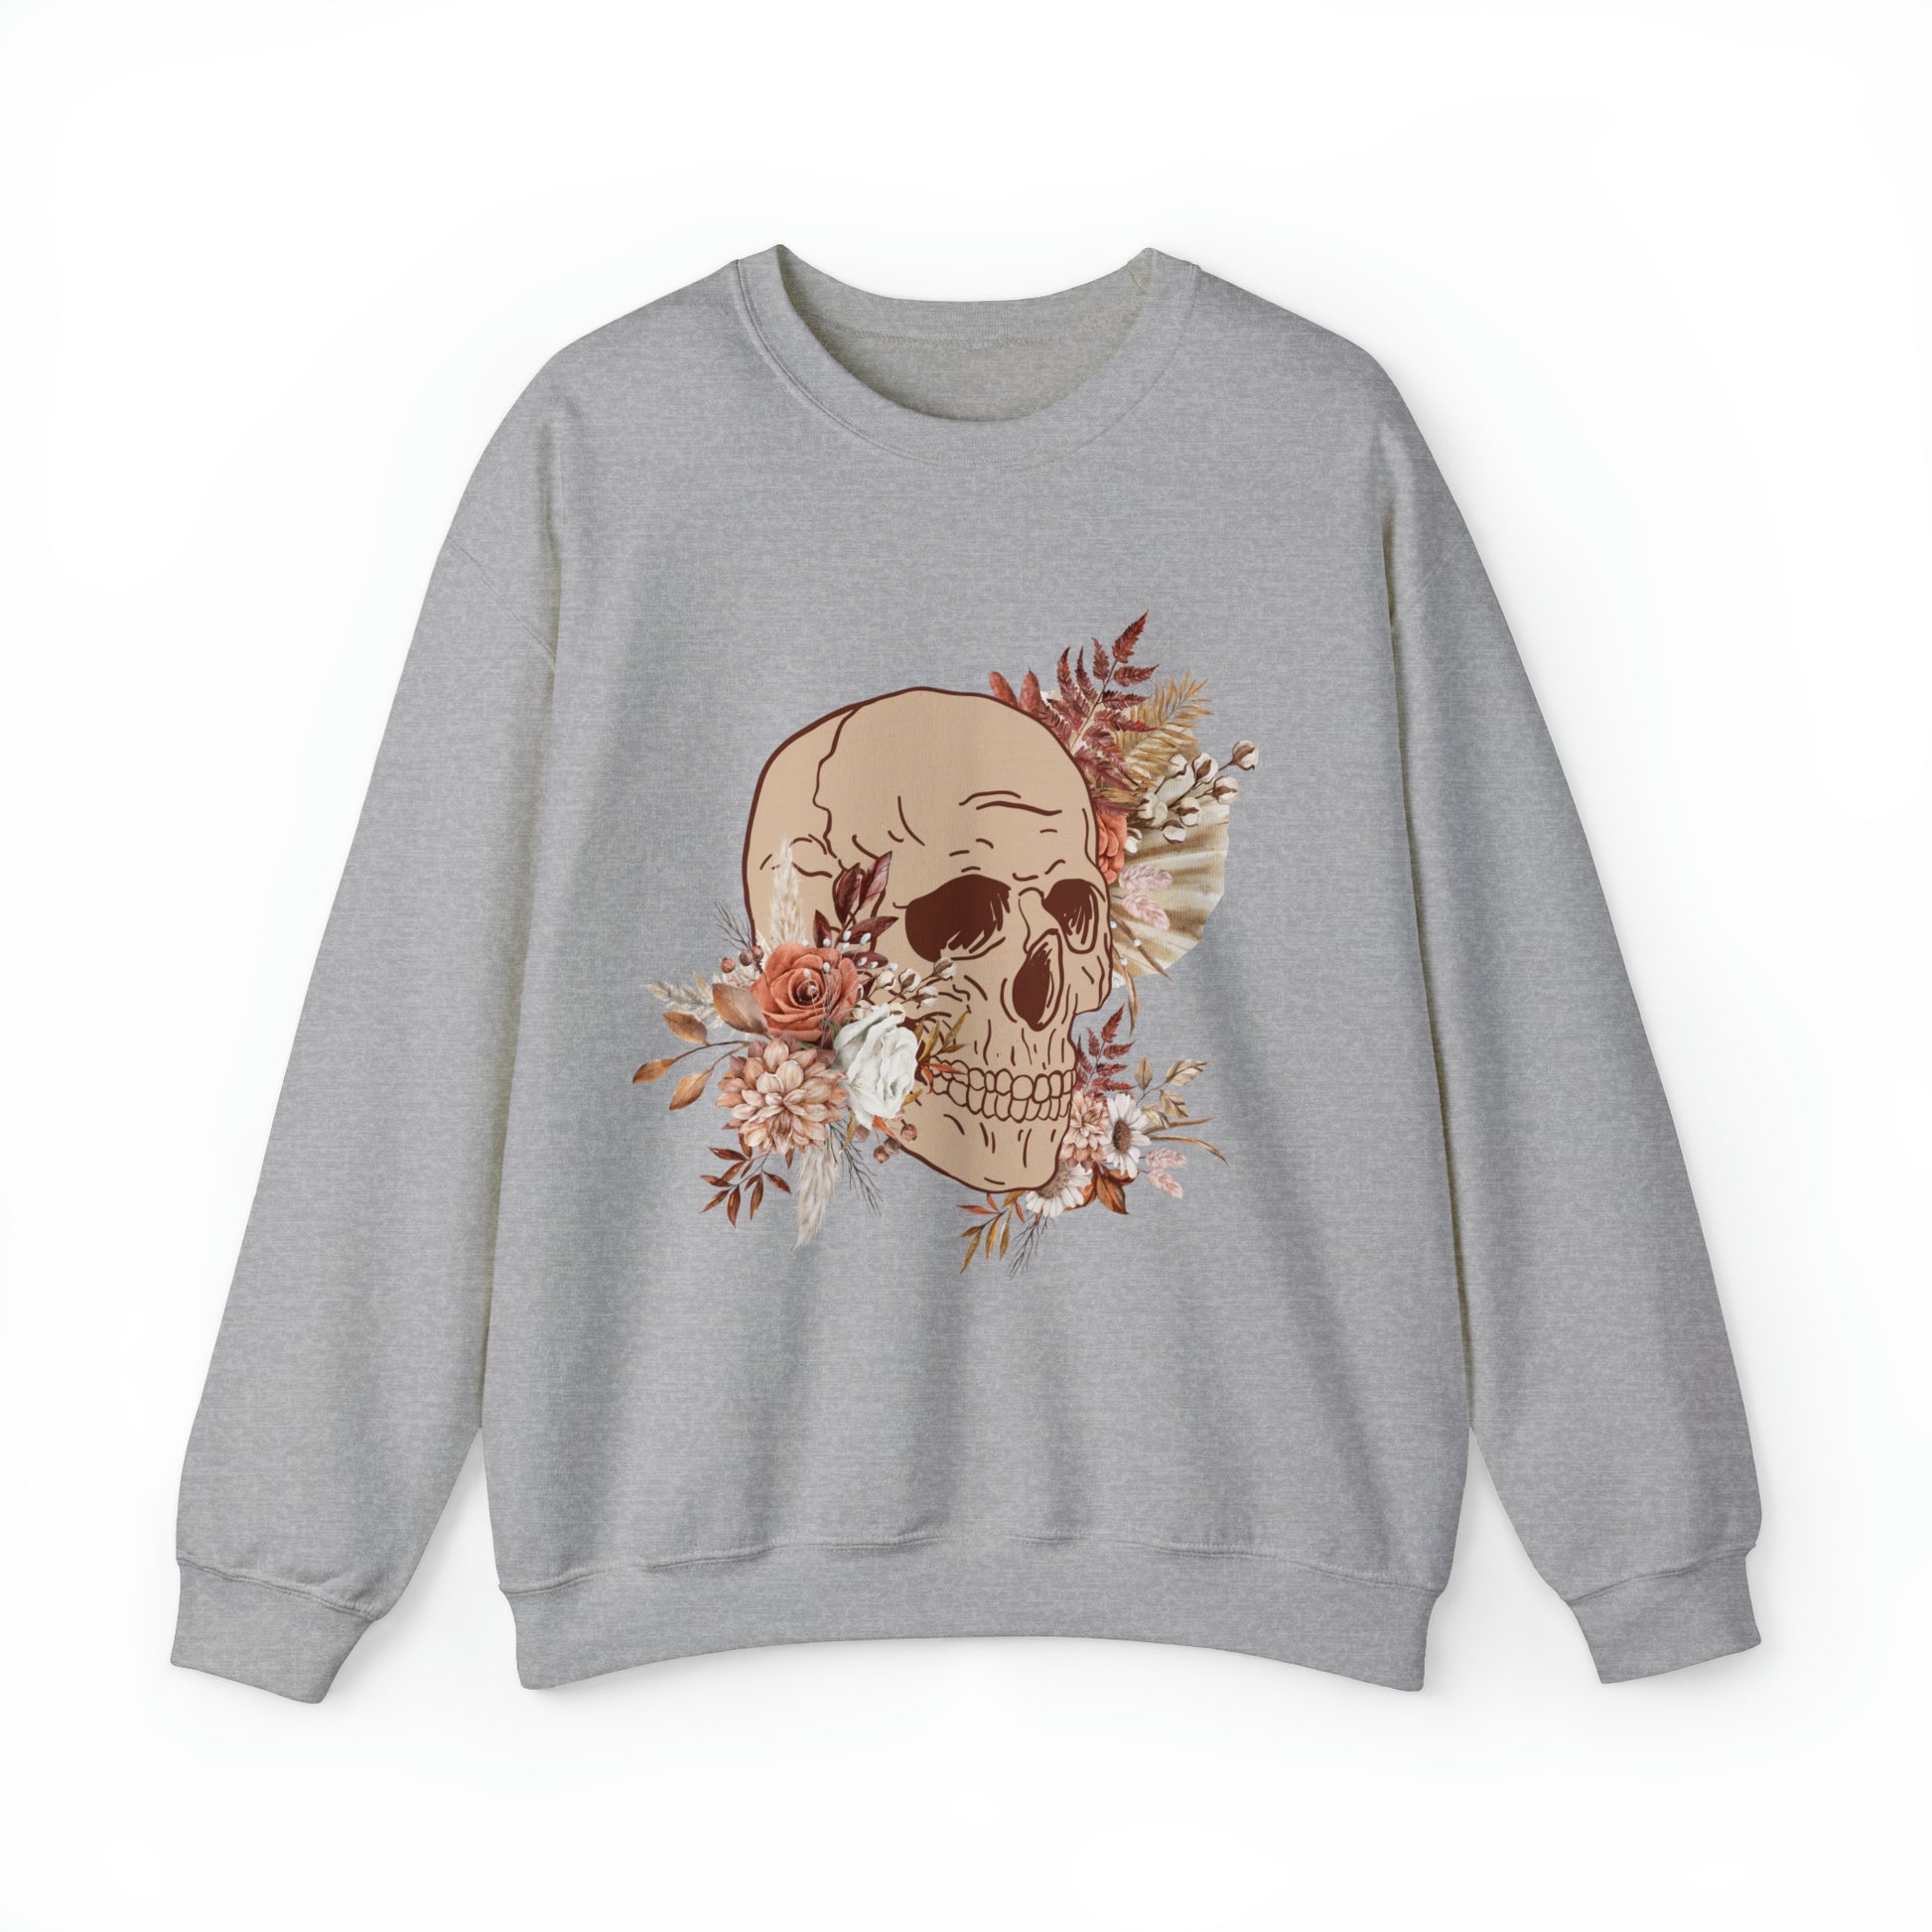 Unisex Vintage Skull and Flower Heavy Blend Crewneck Sweatshirt grey front